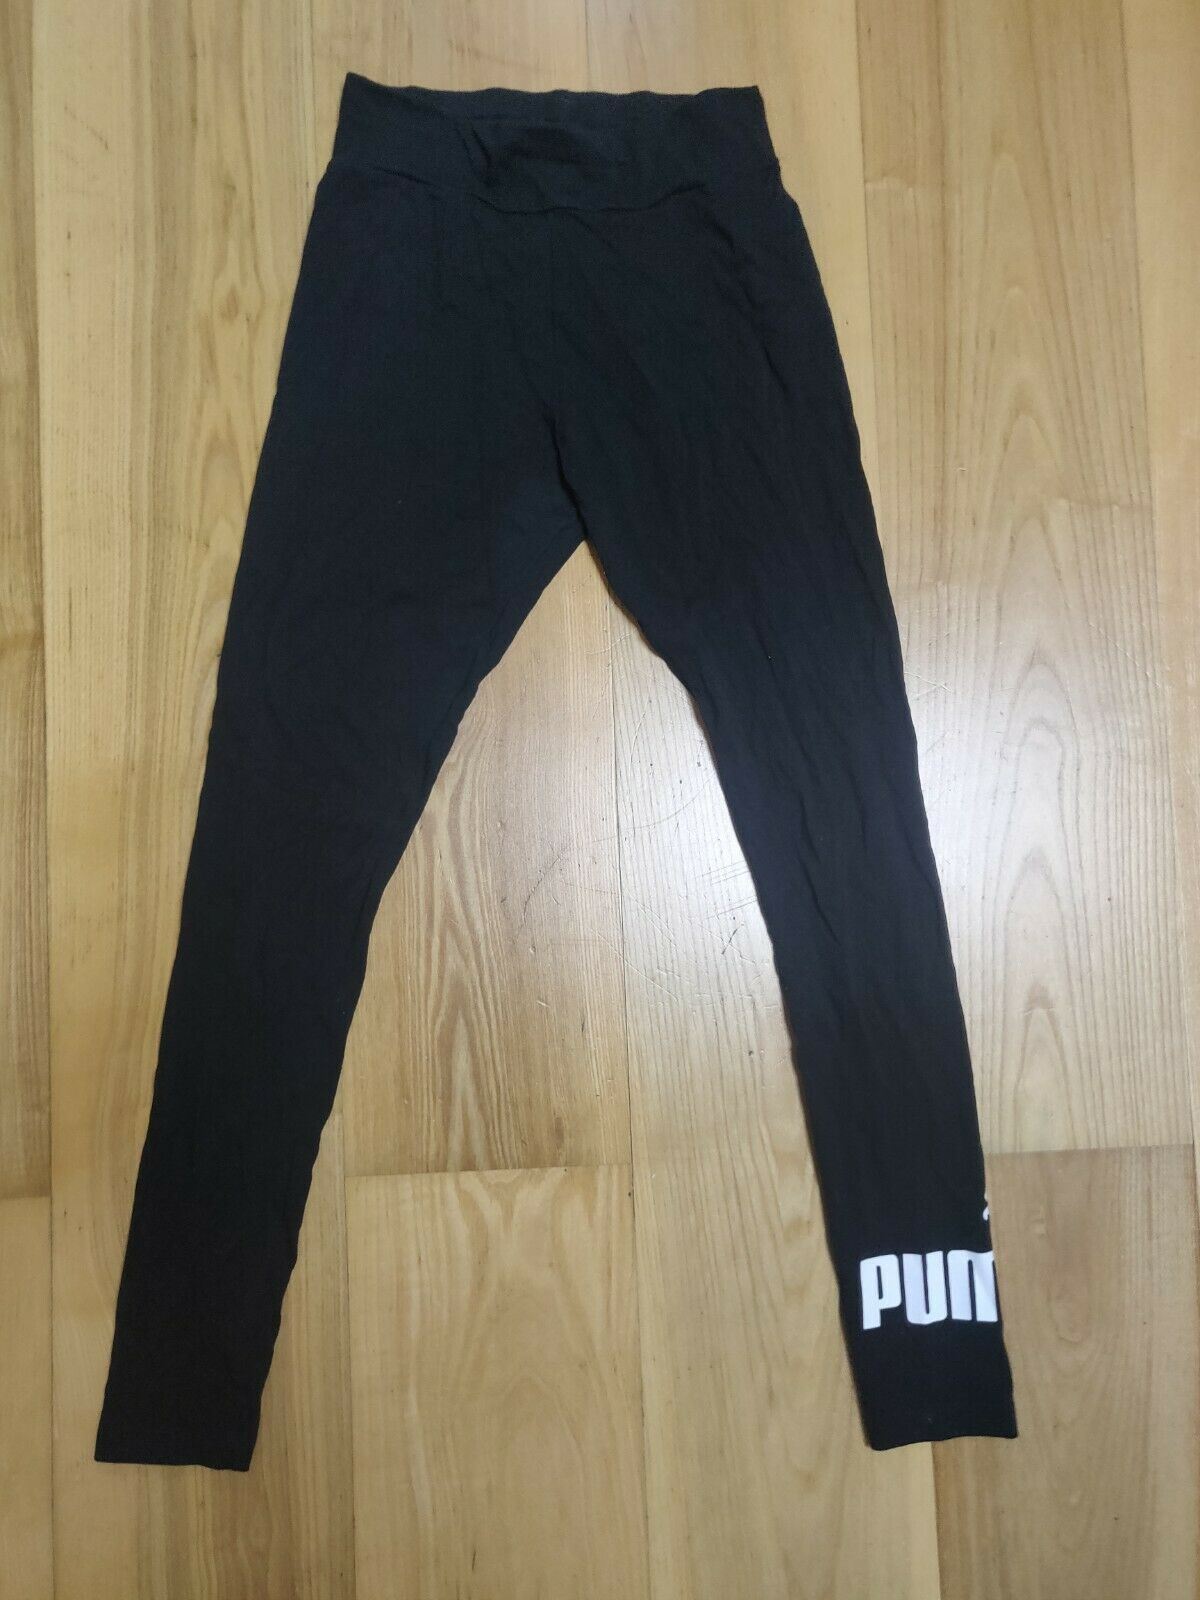 Puma Black Logo Cotton Leggings Women Size UK 10